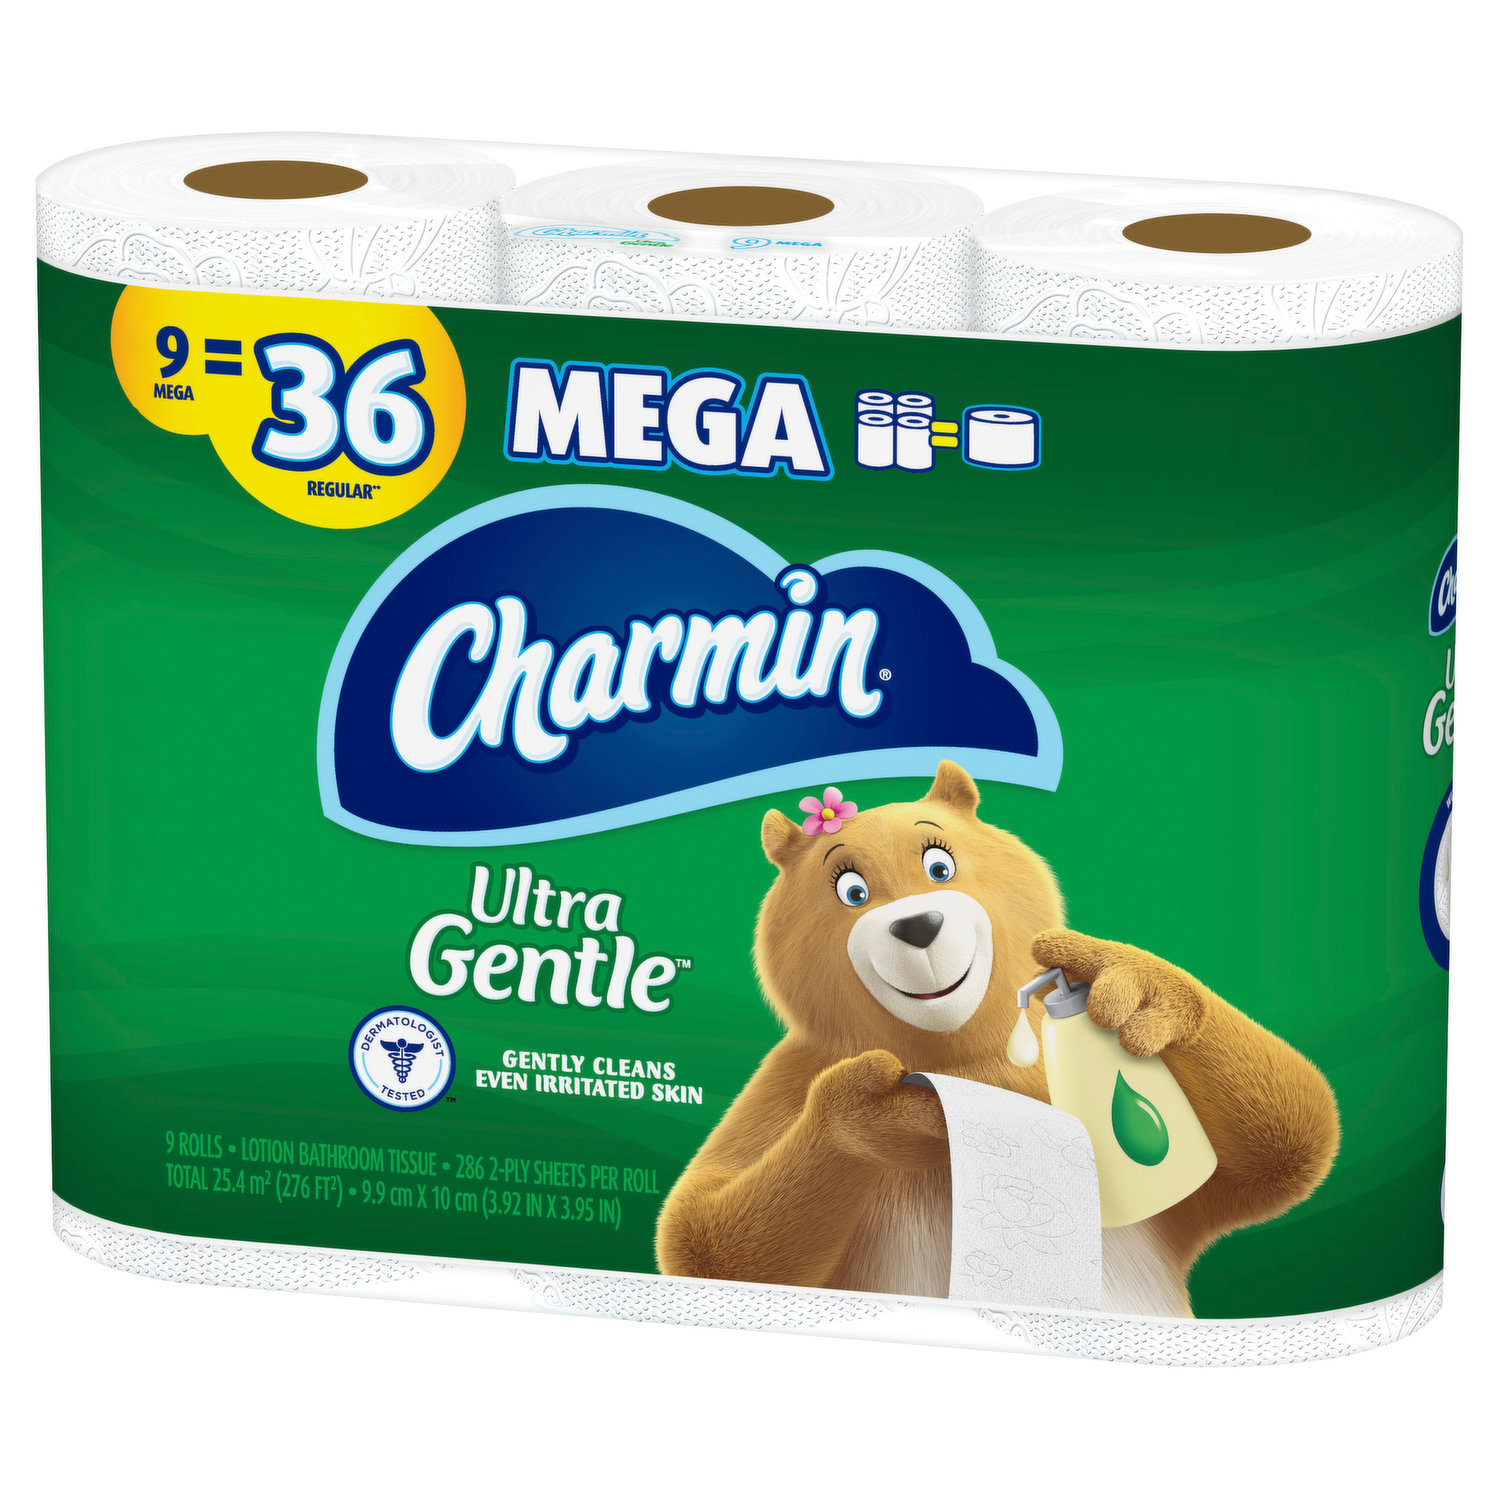 Charmin Essentials Bathroom Tissue, Strong, Unscented, Mega Roll, 2-Ply - 12 rolls